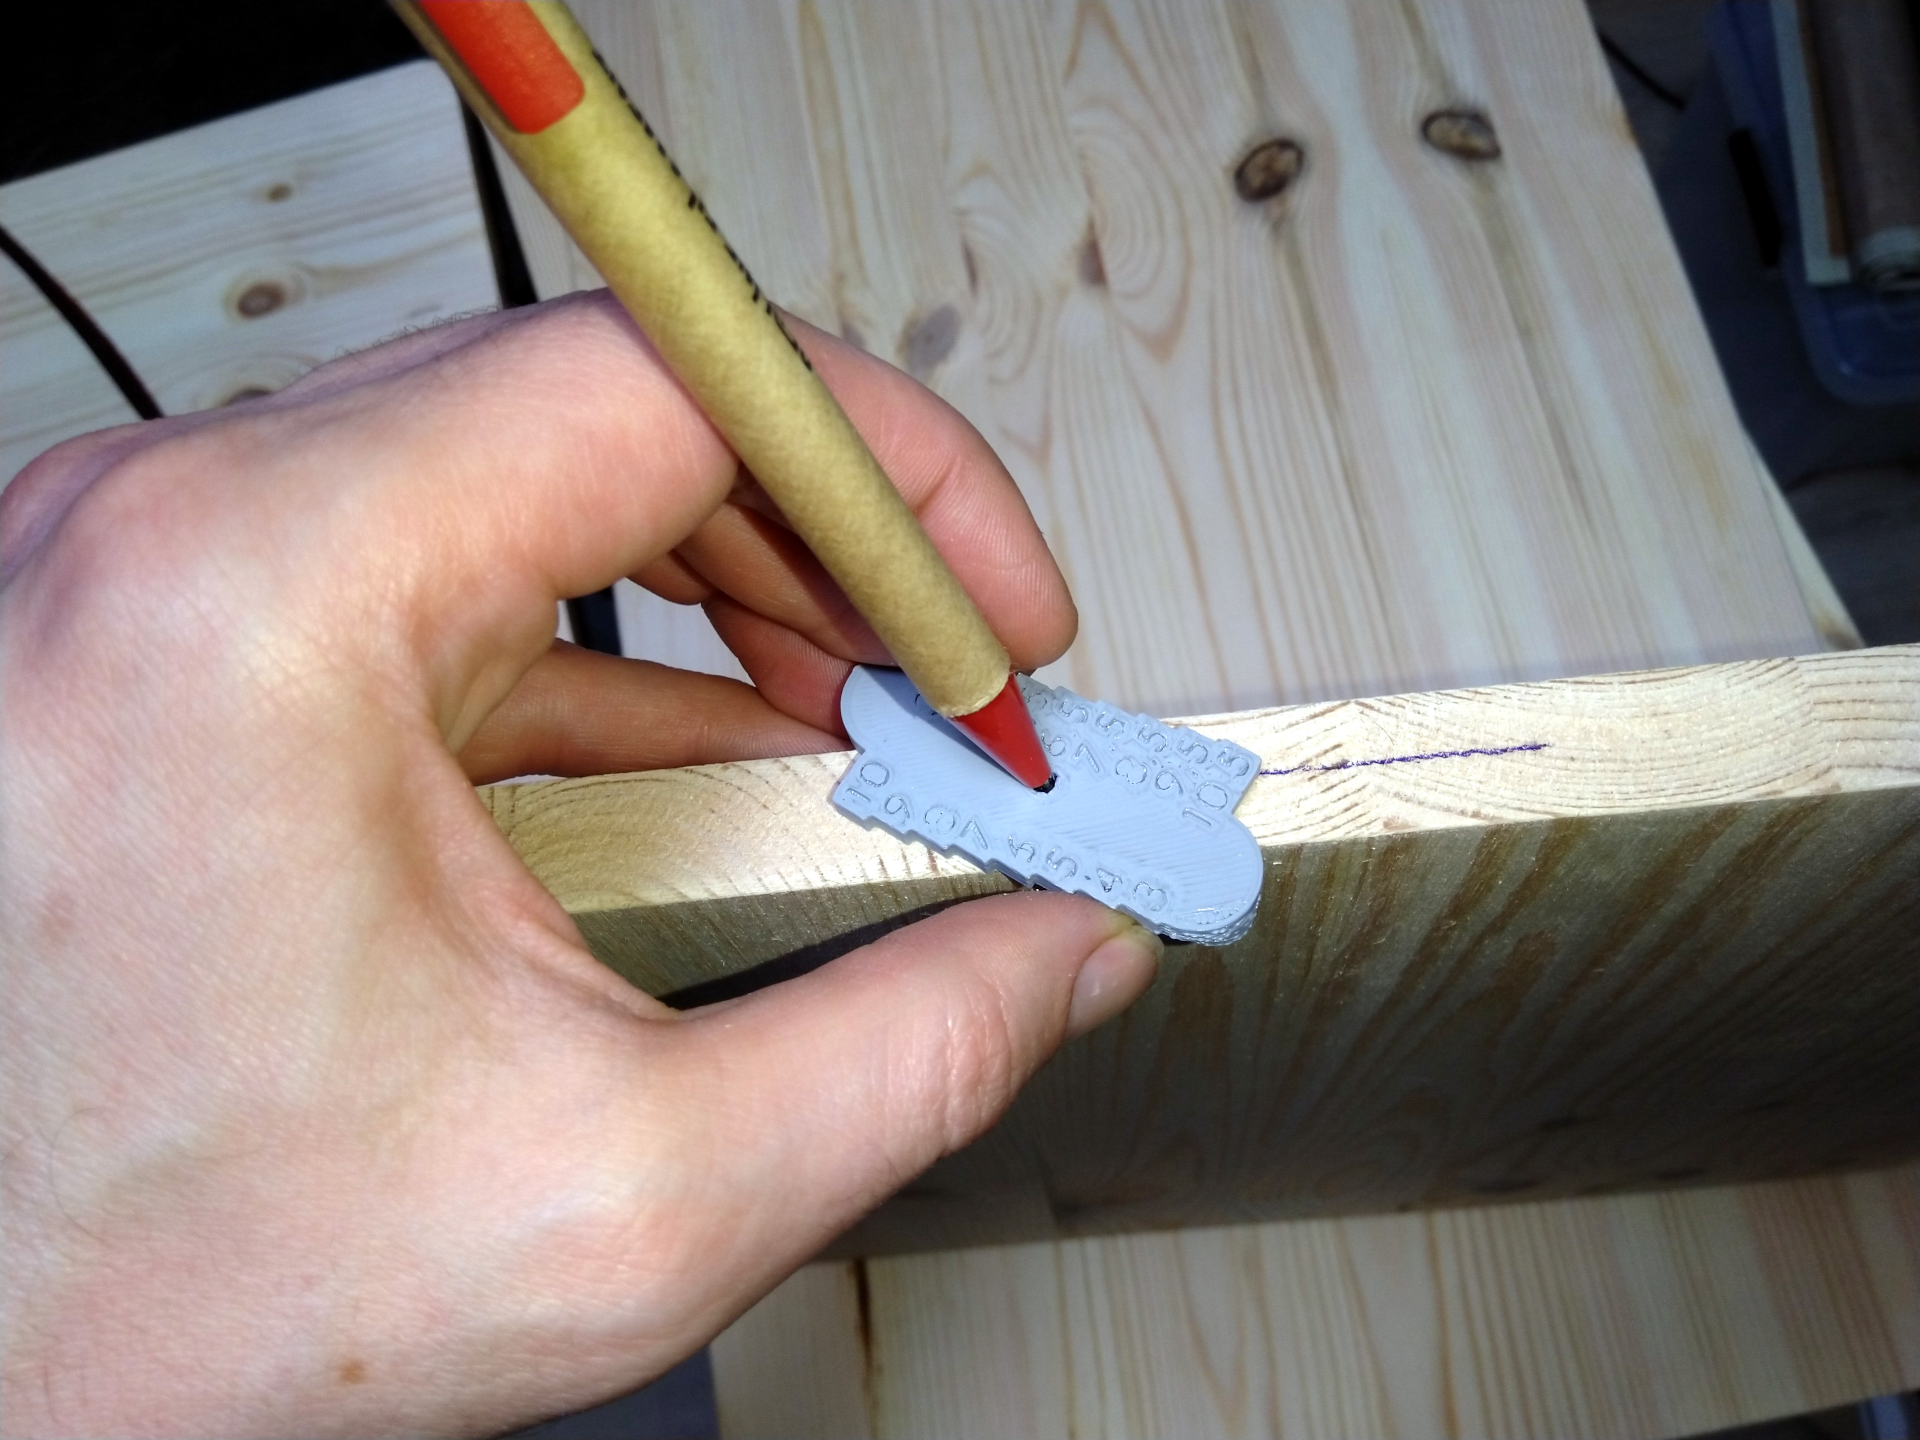 Center Finder / Marking Tool Wood Work